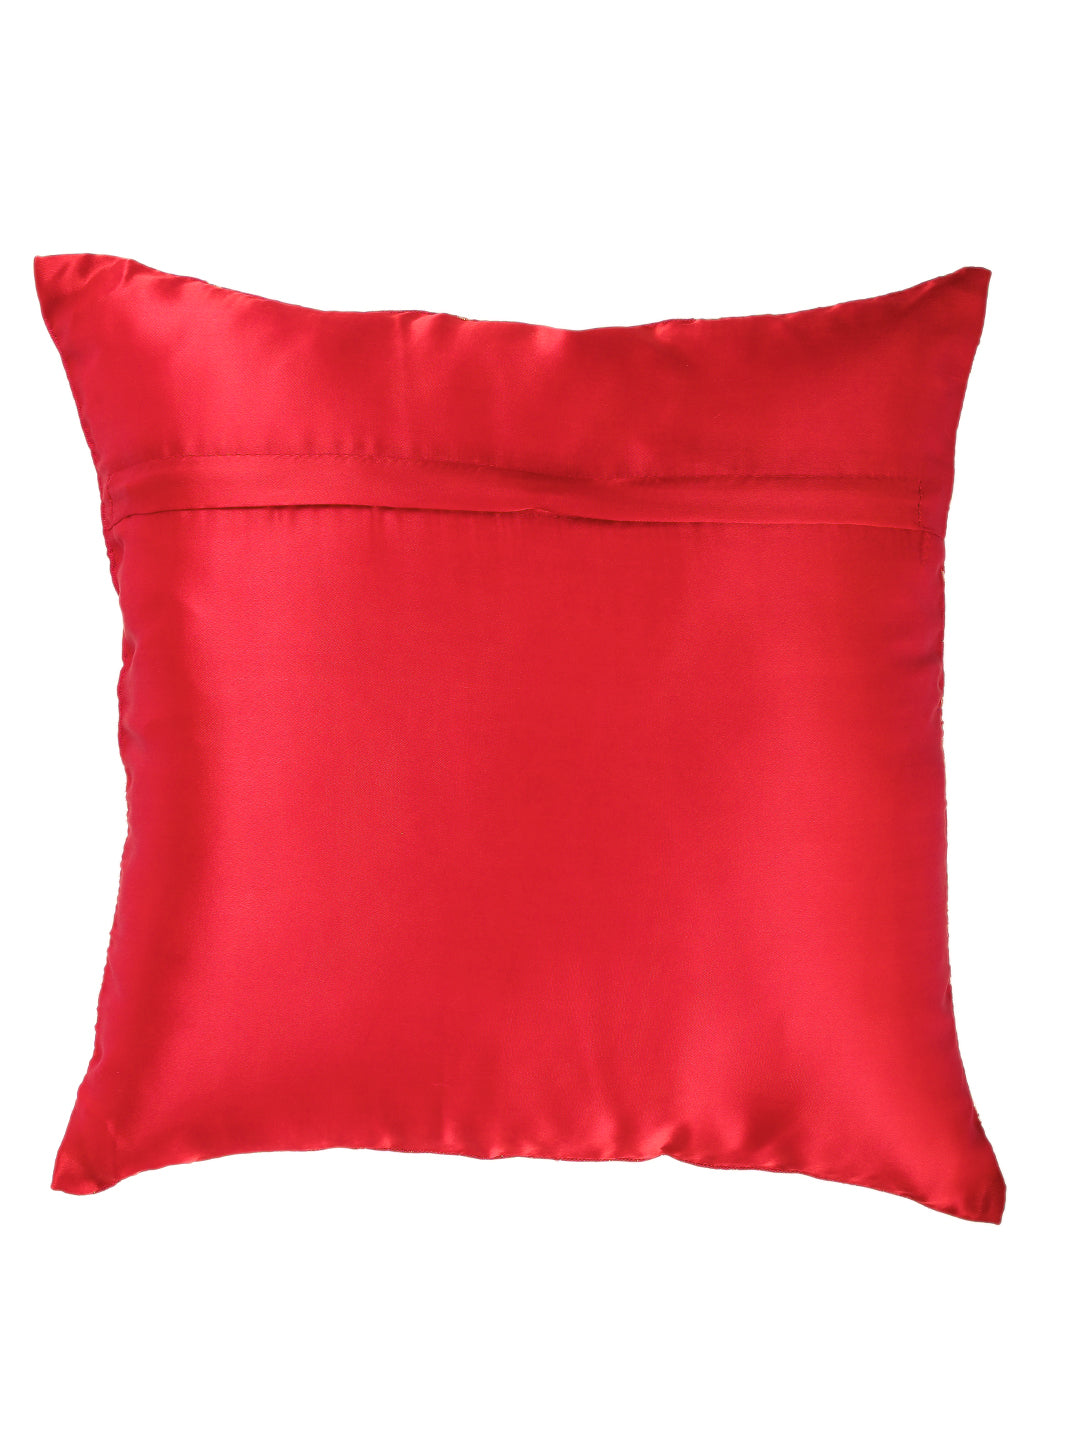 Silkfab Set 0f 5 Decorative Silk Cushion Covers (16x16) Floral Red - SILKFAB